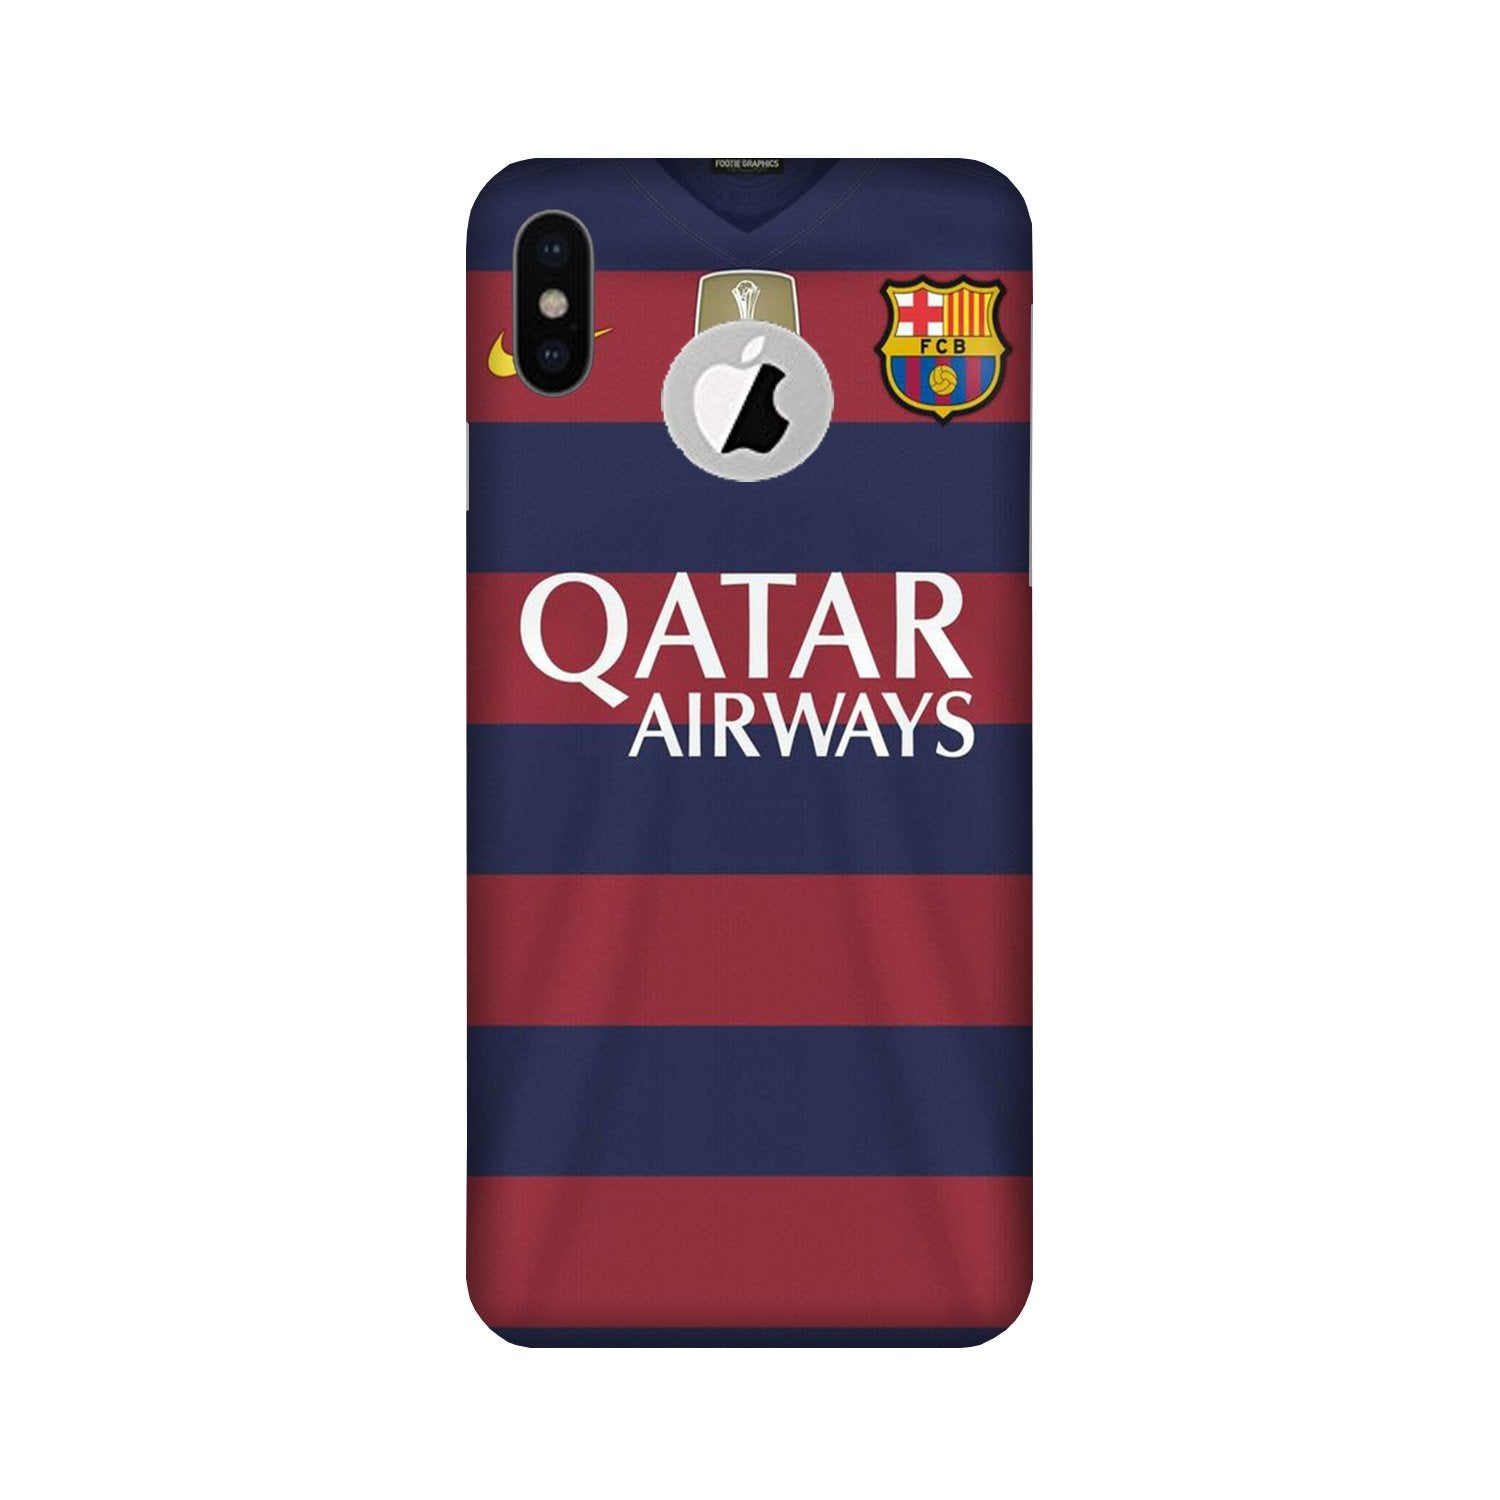 Qatar Airways Case for iPhone X logo cut  (Design - 160)